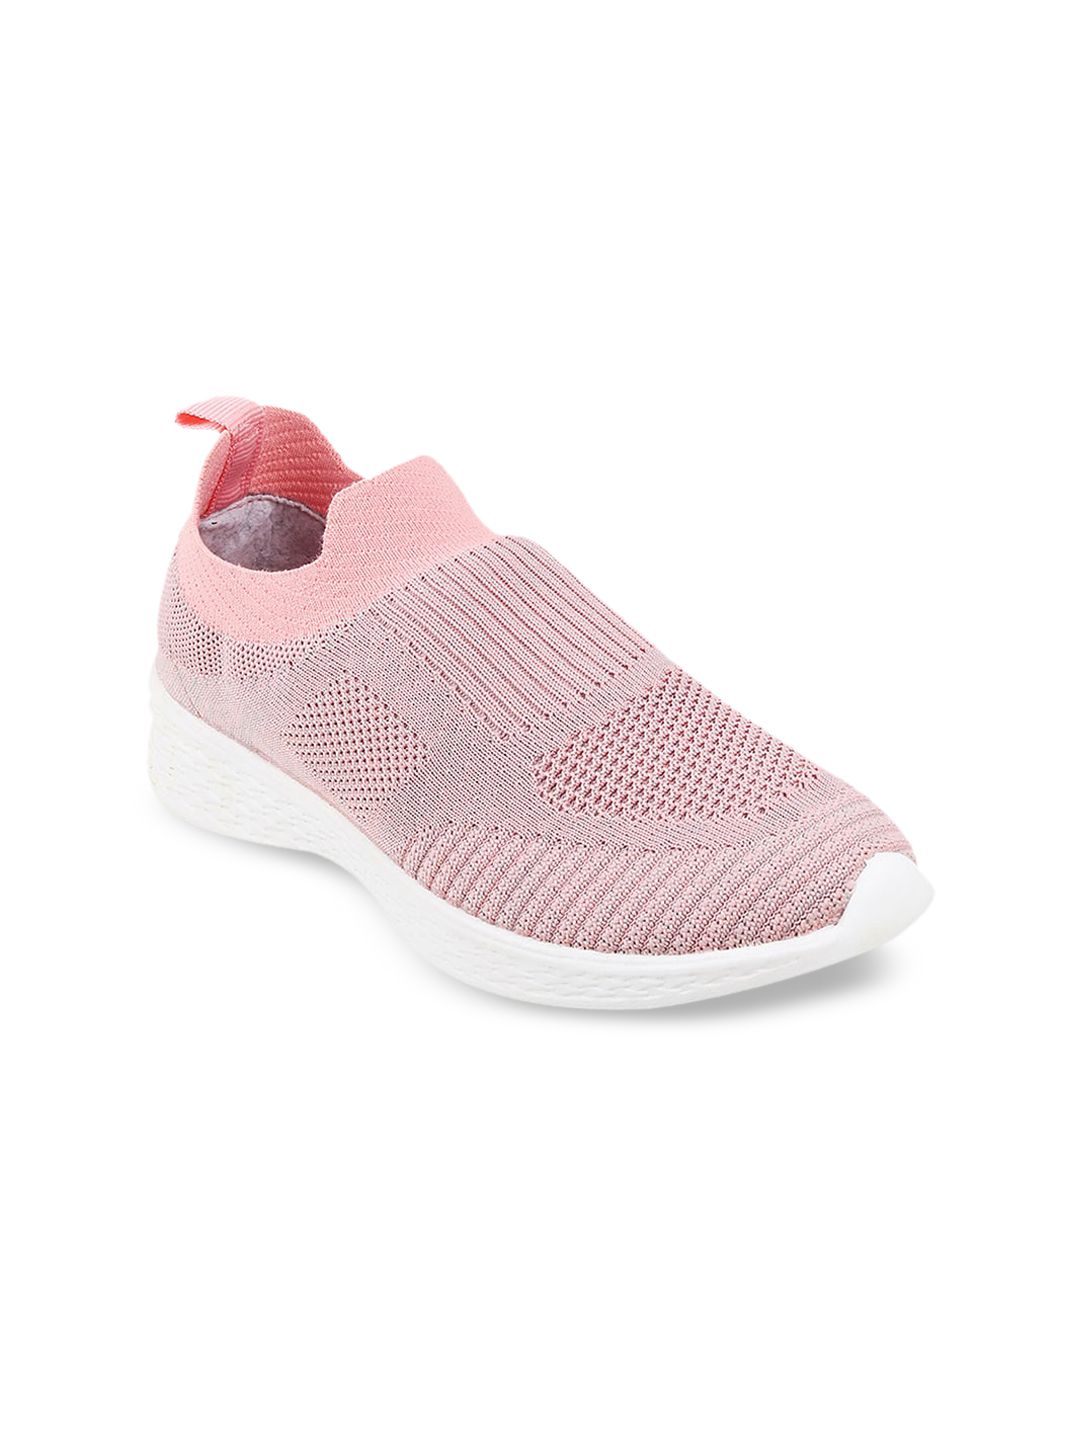 WALKWAY by Metro Women Pink Woven Design Slip-On Sneakers Price in India